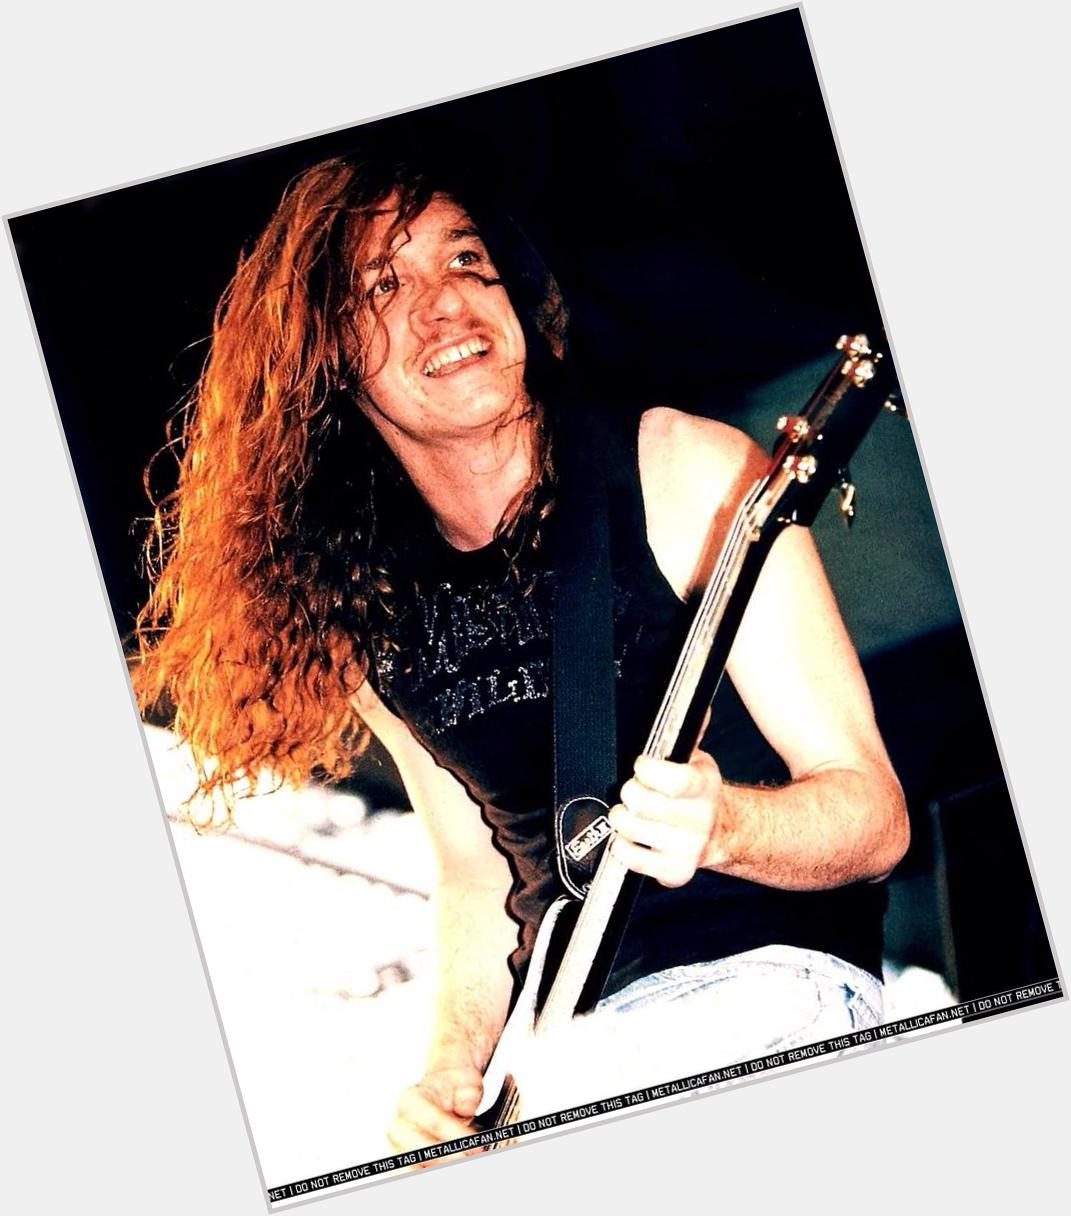 Happy birthday to former Metallica bassist Cliff Burton! 
R.I.P. 